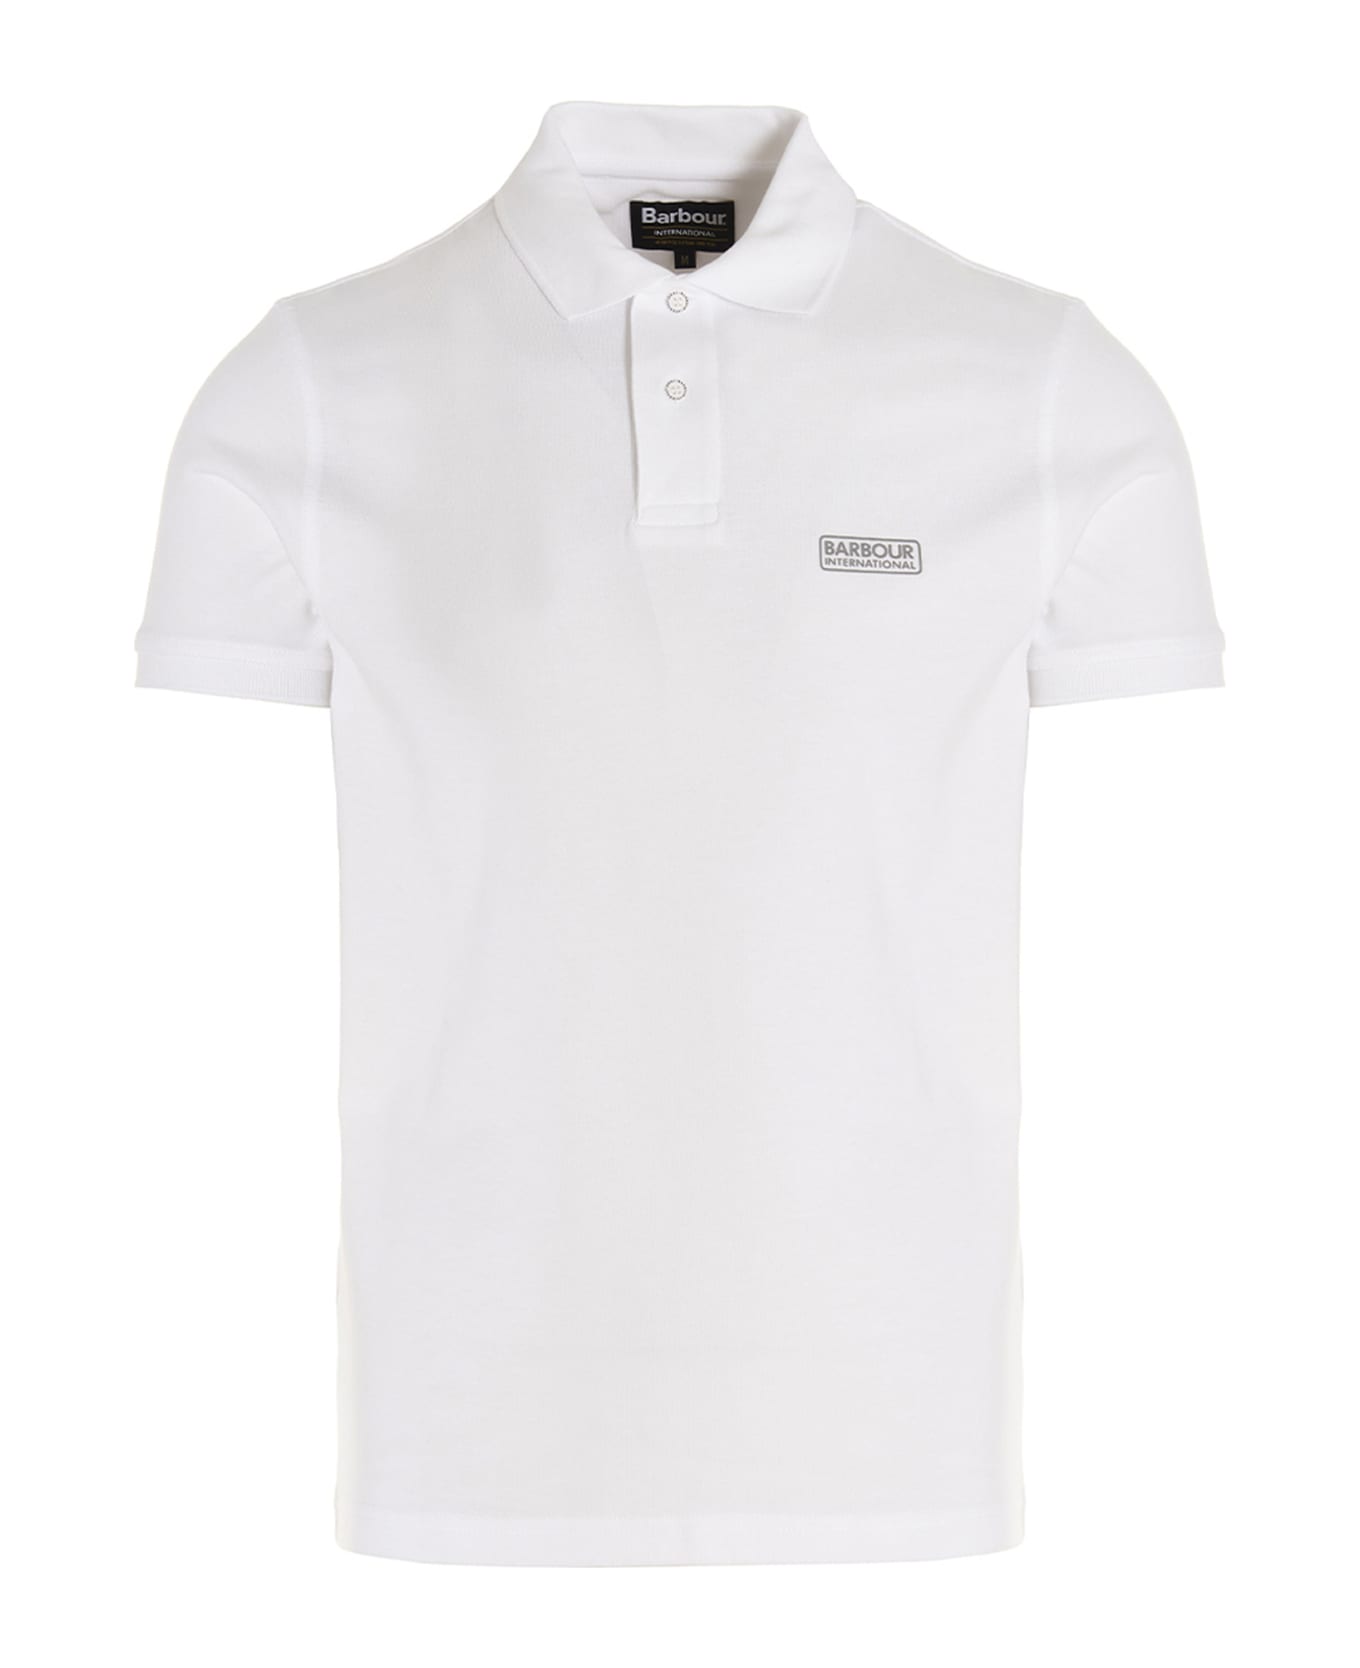 Barbour 'essential' Polo Shirt - White